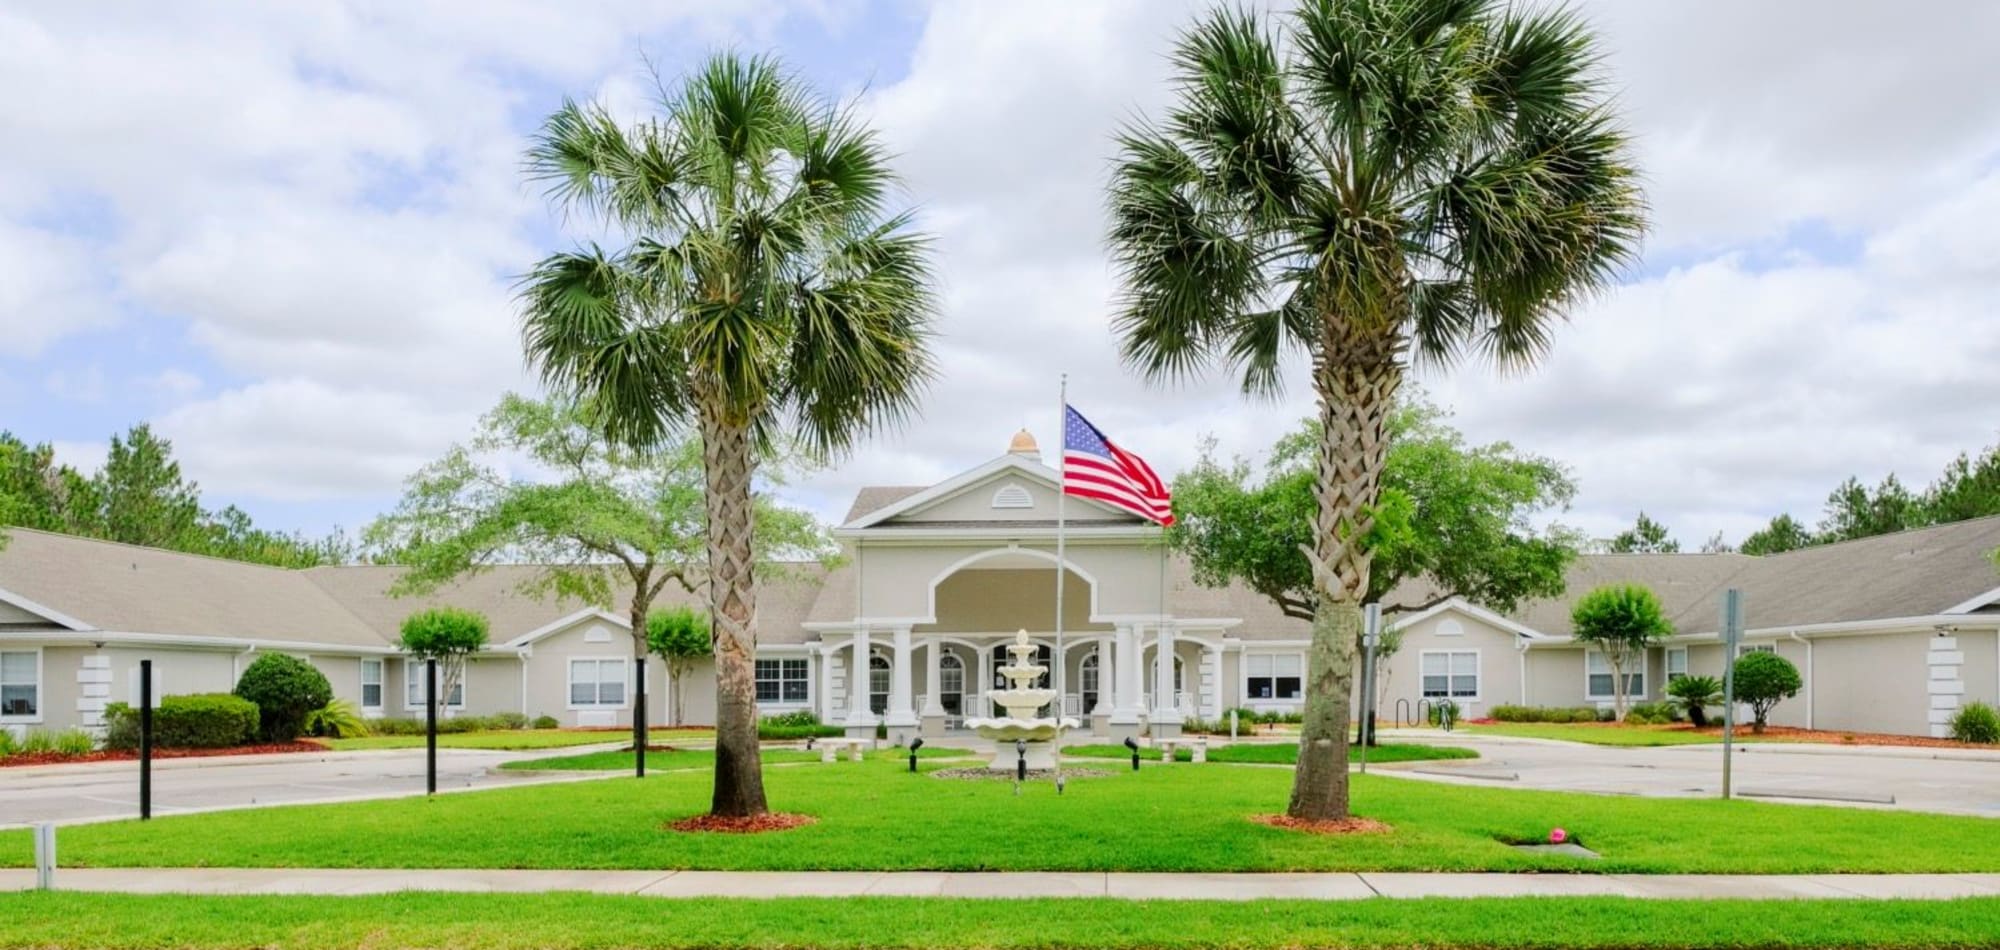 Grand Villa of Palm Coast offers senior living in Palm Coast, Florida. 